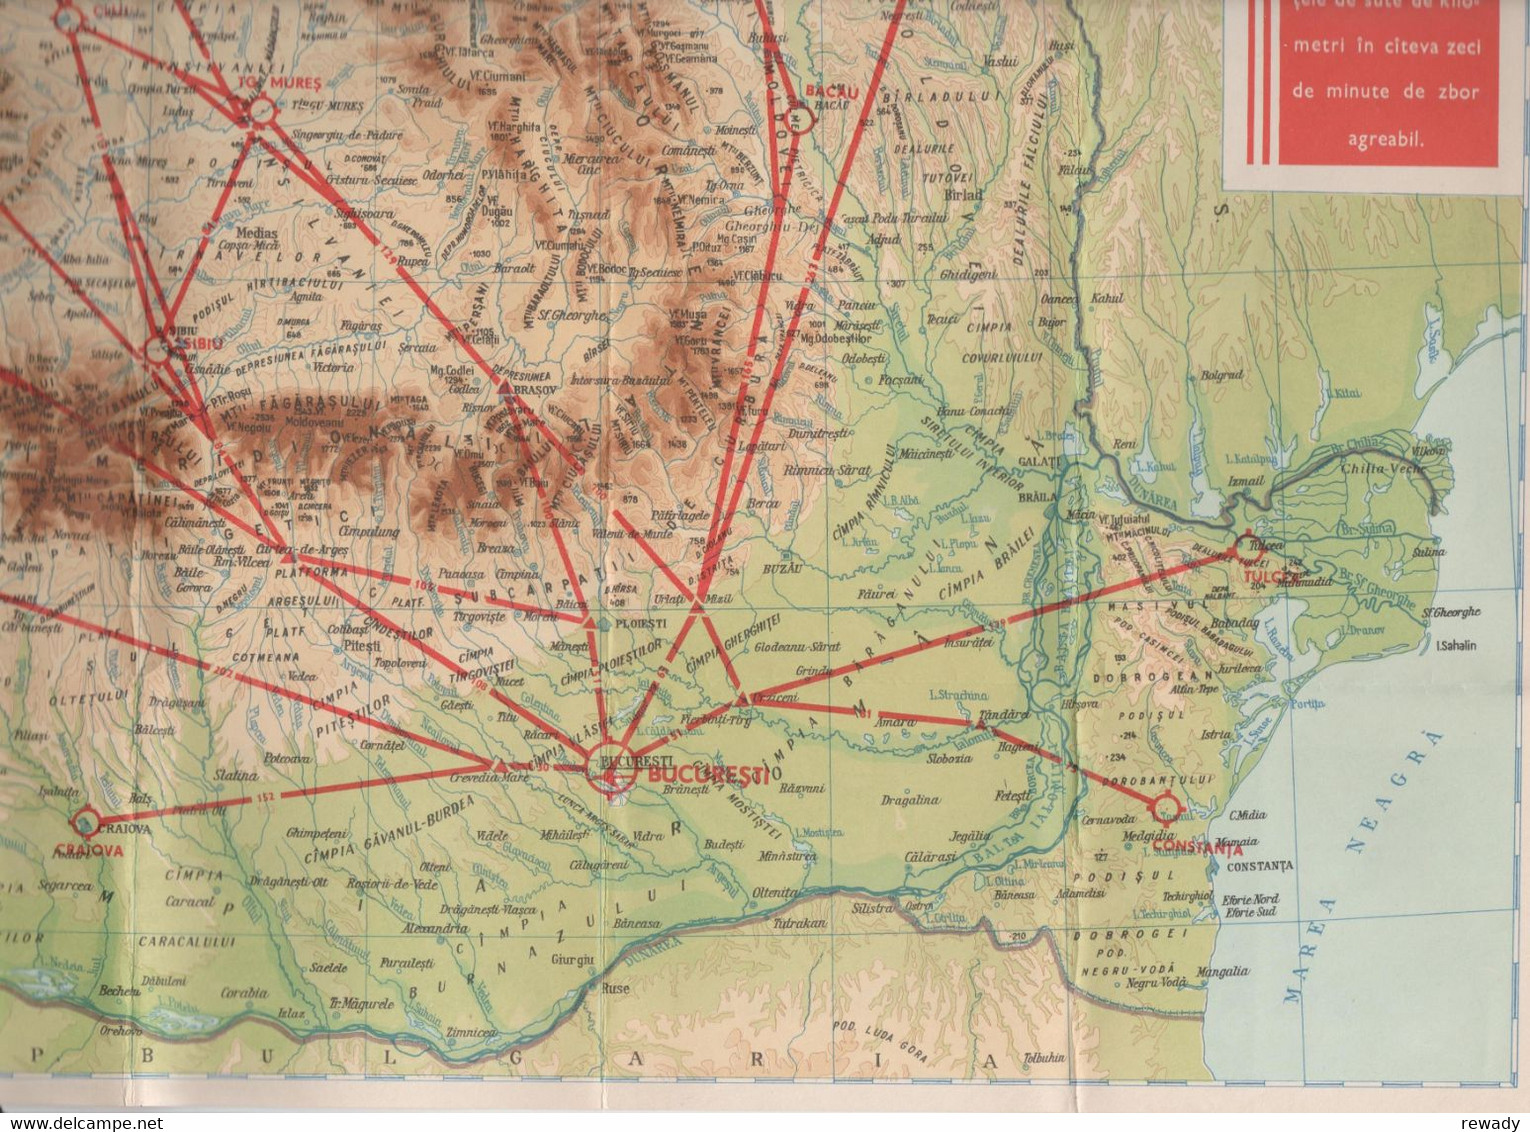 TAROM - Rute Interne / Vintage Flight Route Map / Agentii Romania - Magazines Inflight